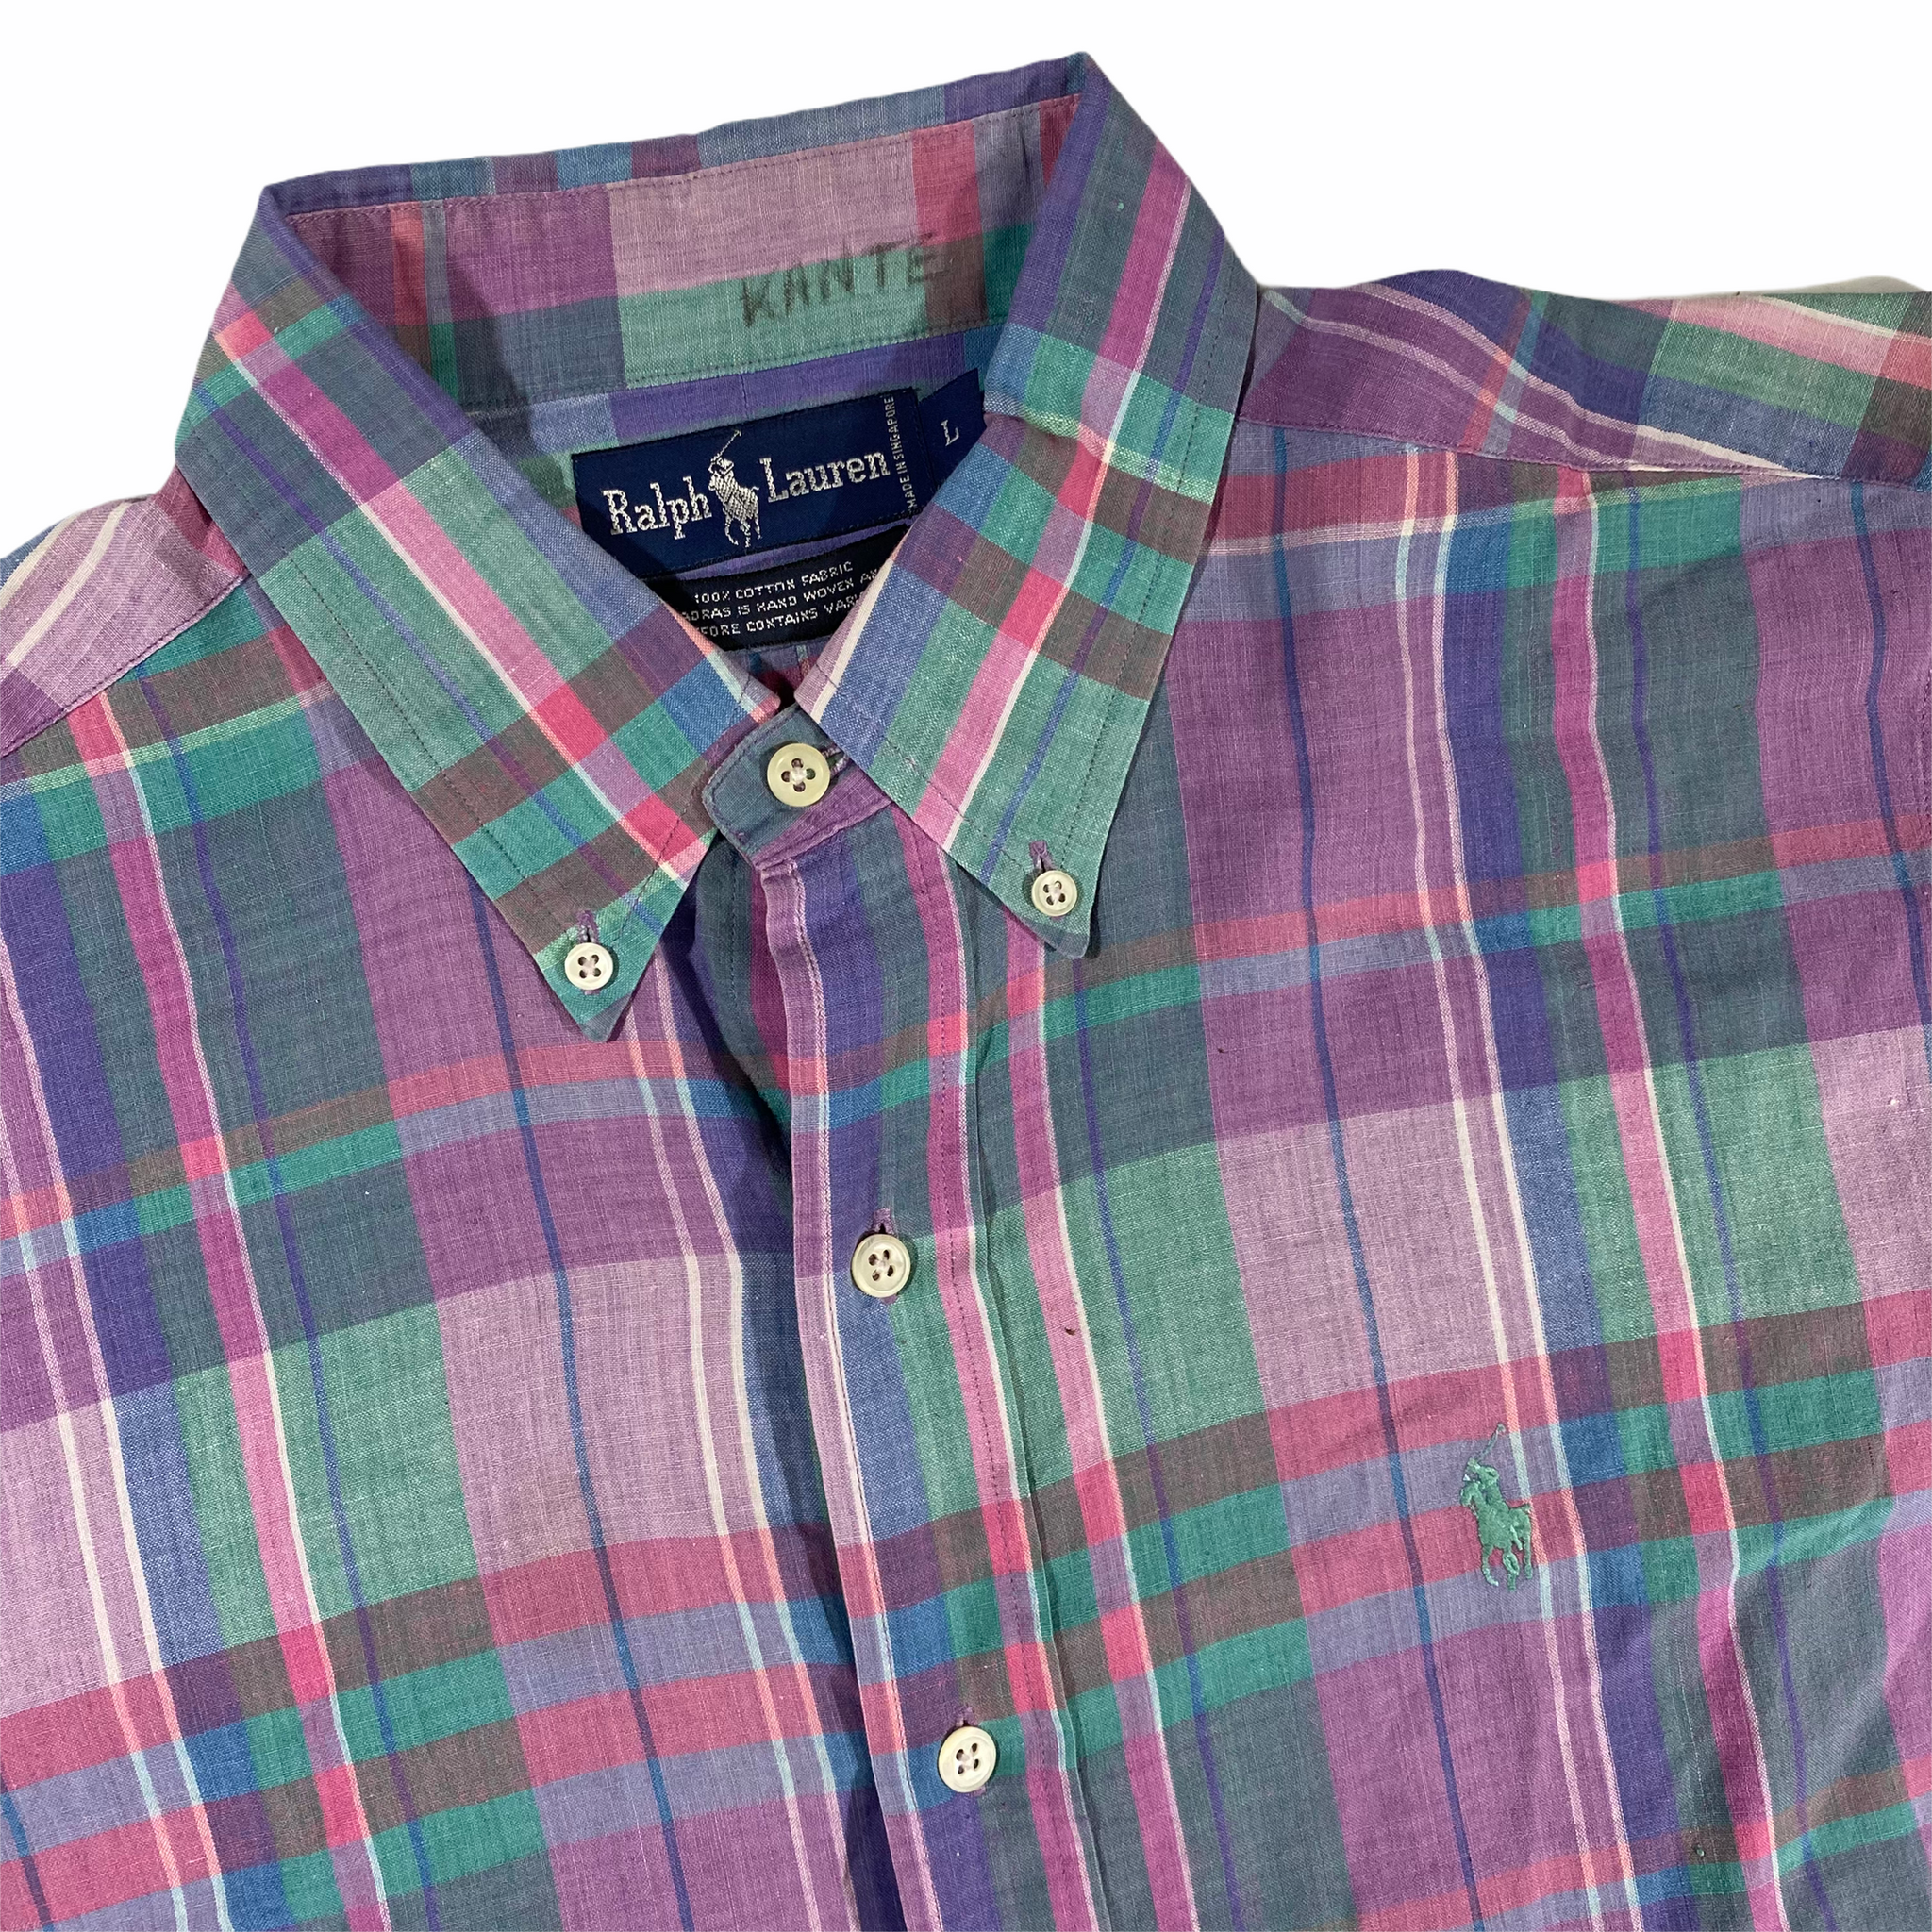 90s Polo ralph lauren madras shirt large – Vintage Sponsor